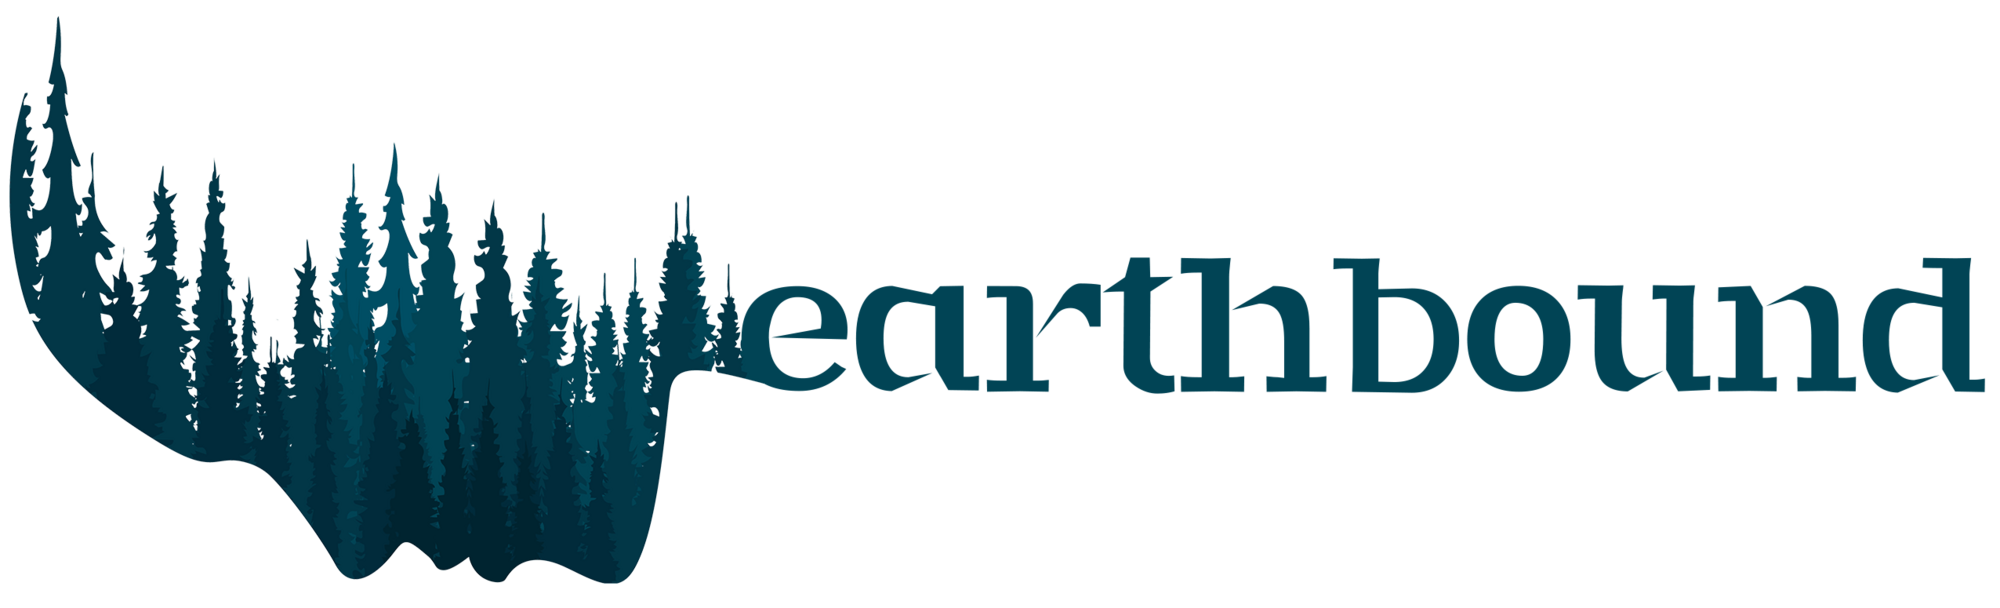 earthbound logo